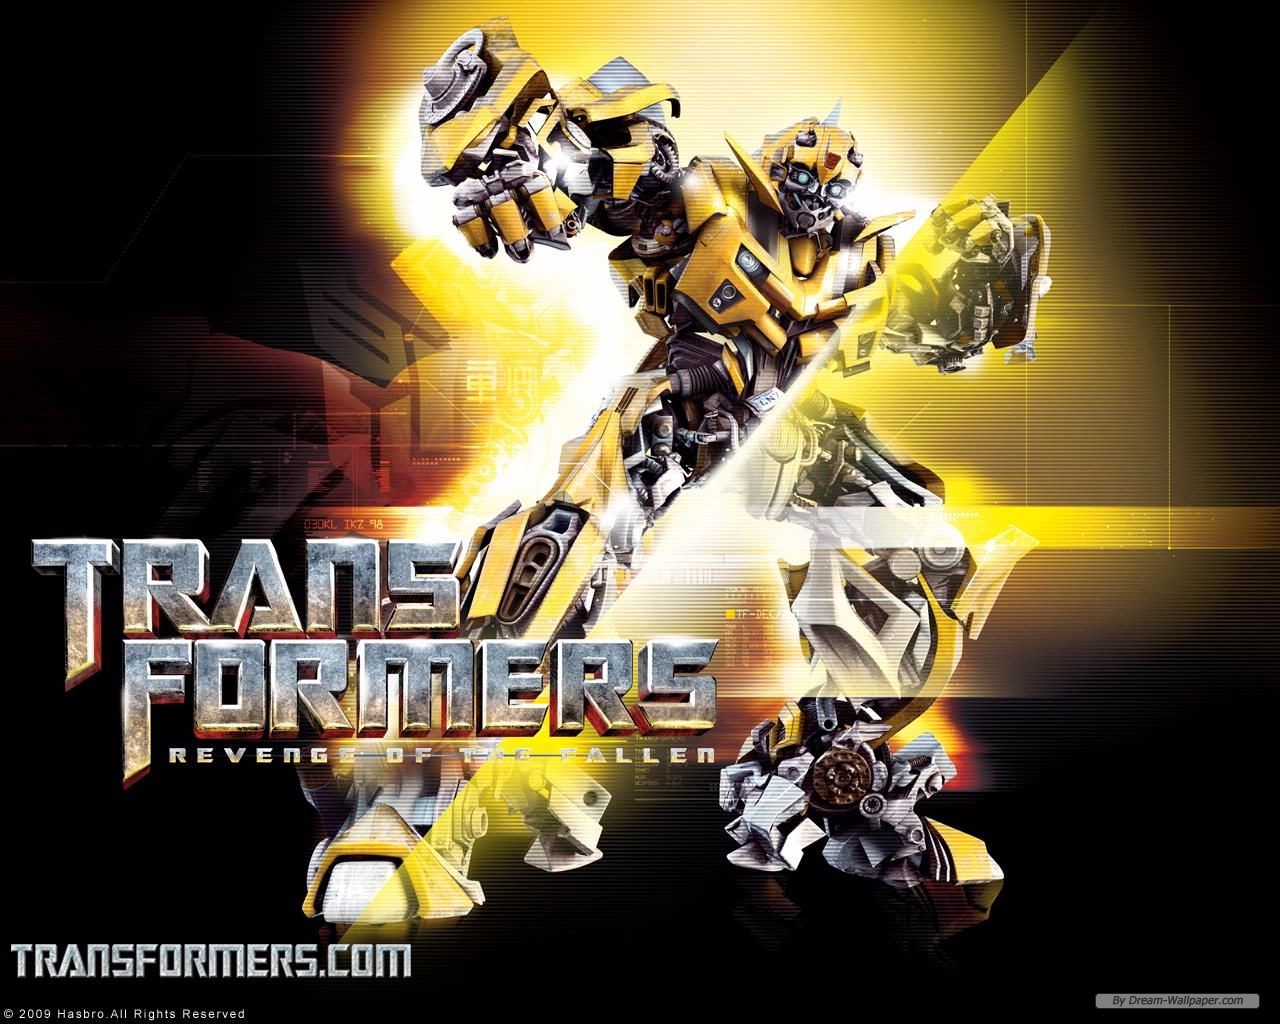 Free Wallpaper - Free Movie wallpaper - Transformers 2 wallpaper ...